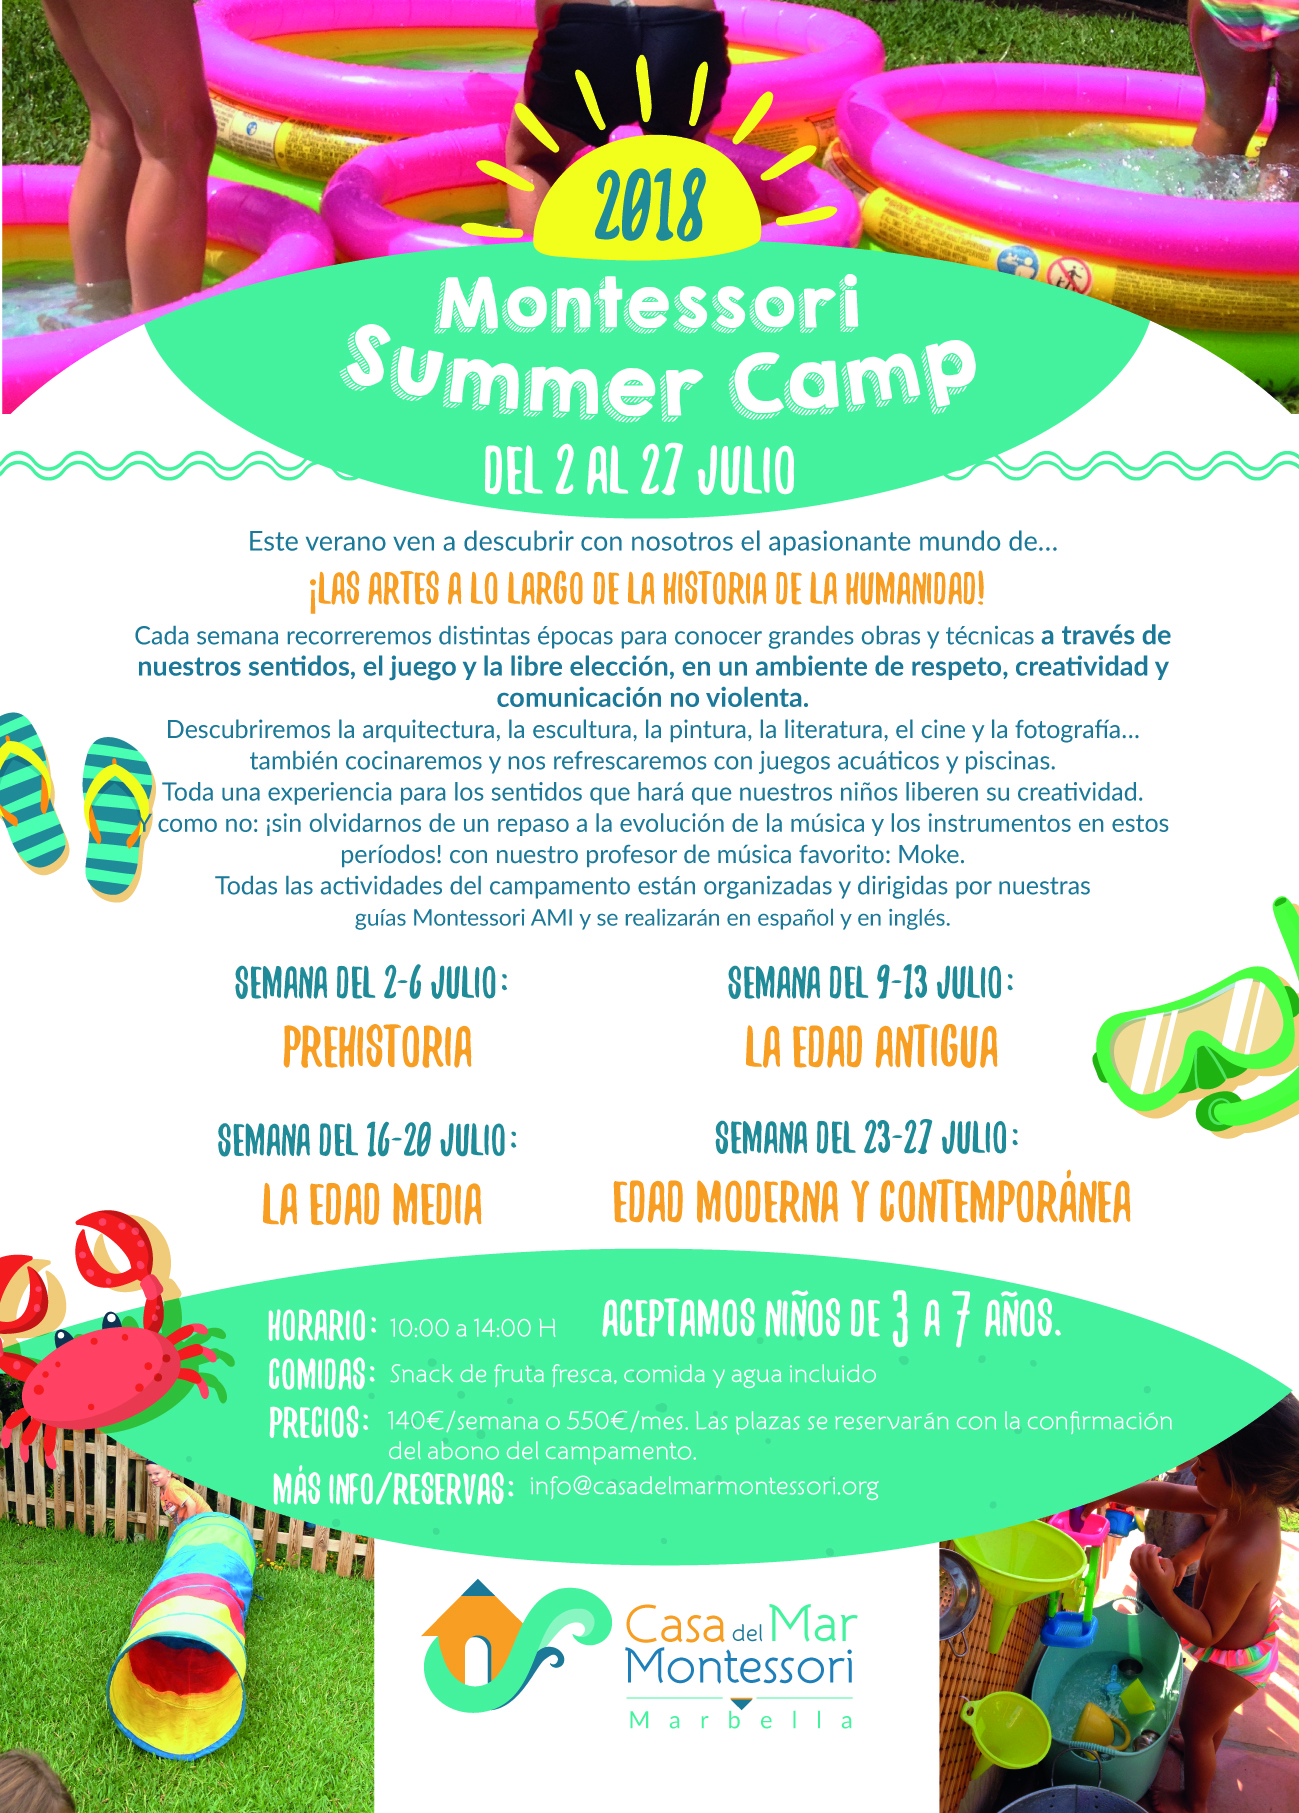 Montessori Summer Camp 2018 poster in spanish